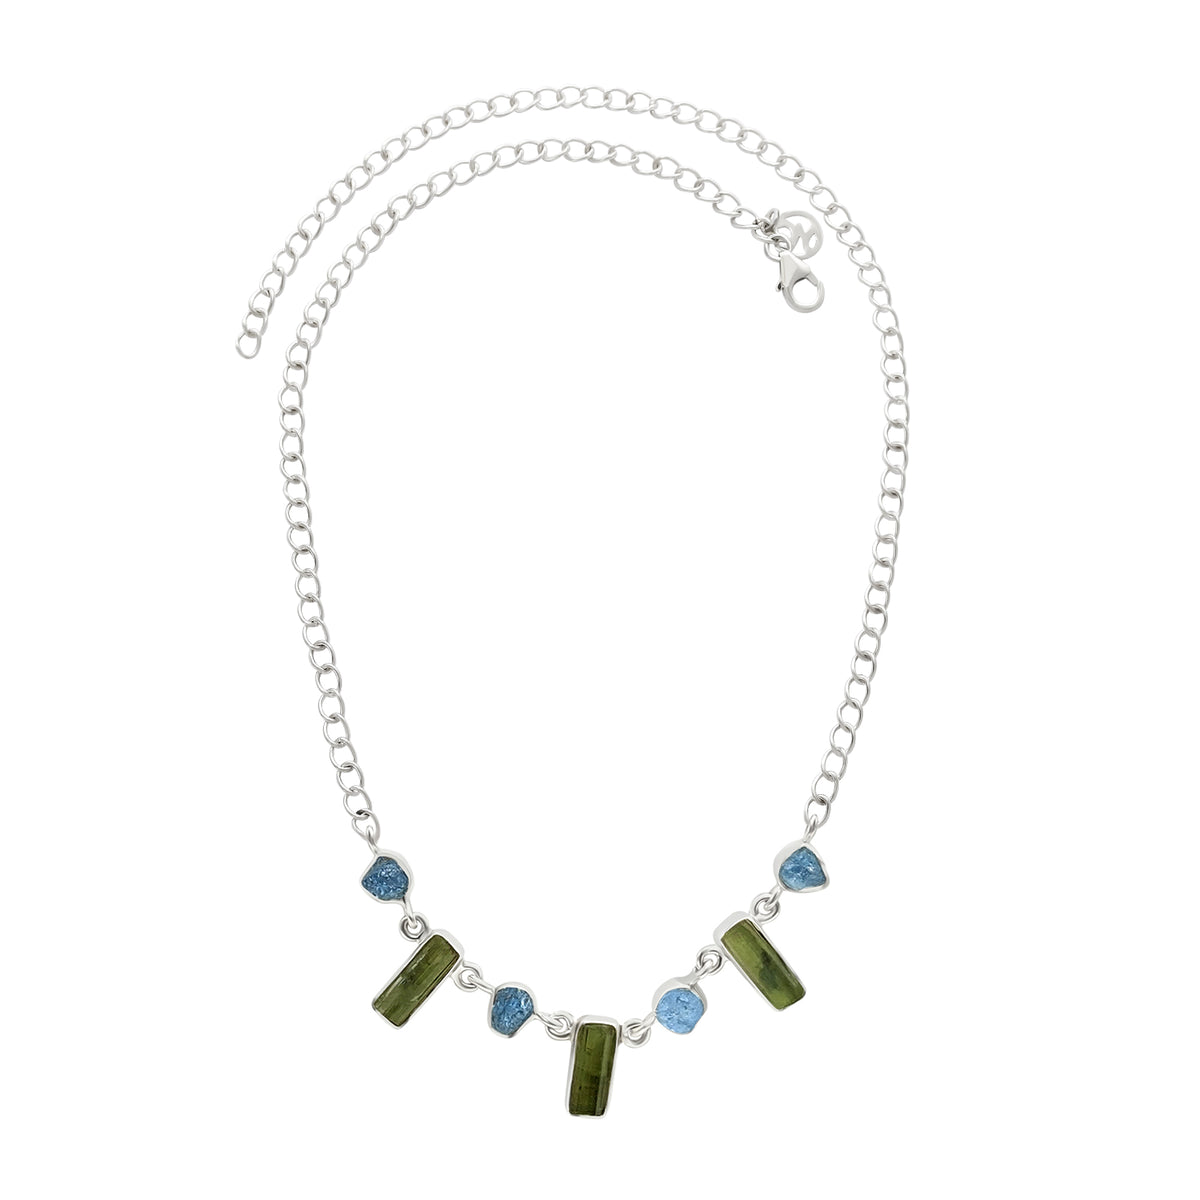 Designer Tourmaline Necklace Studded With Aquamarine Pack of 1 (D107-5)